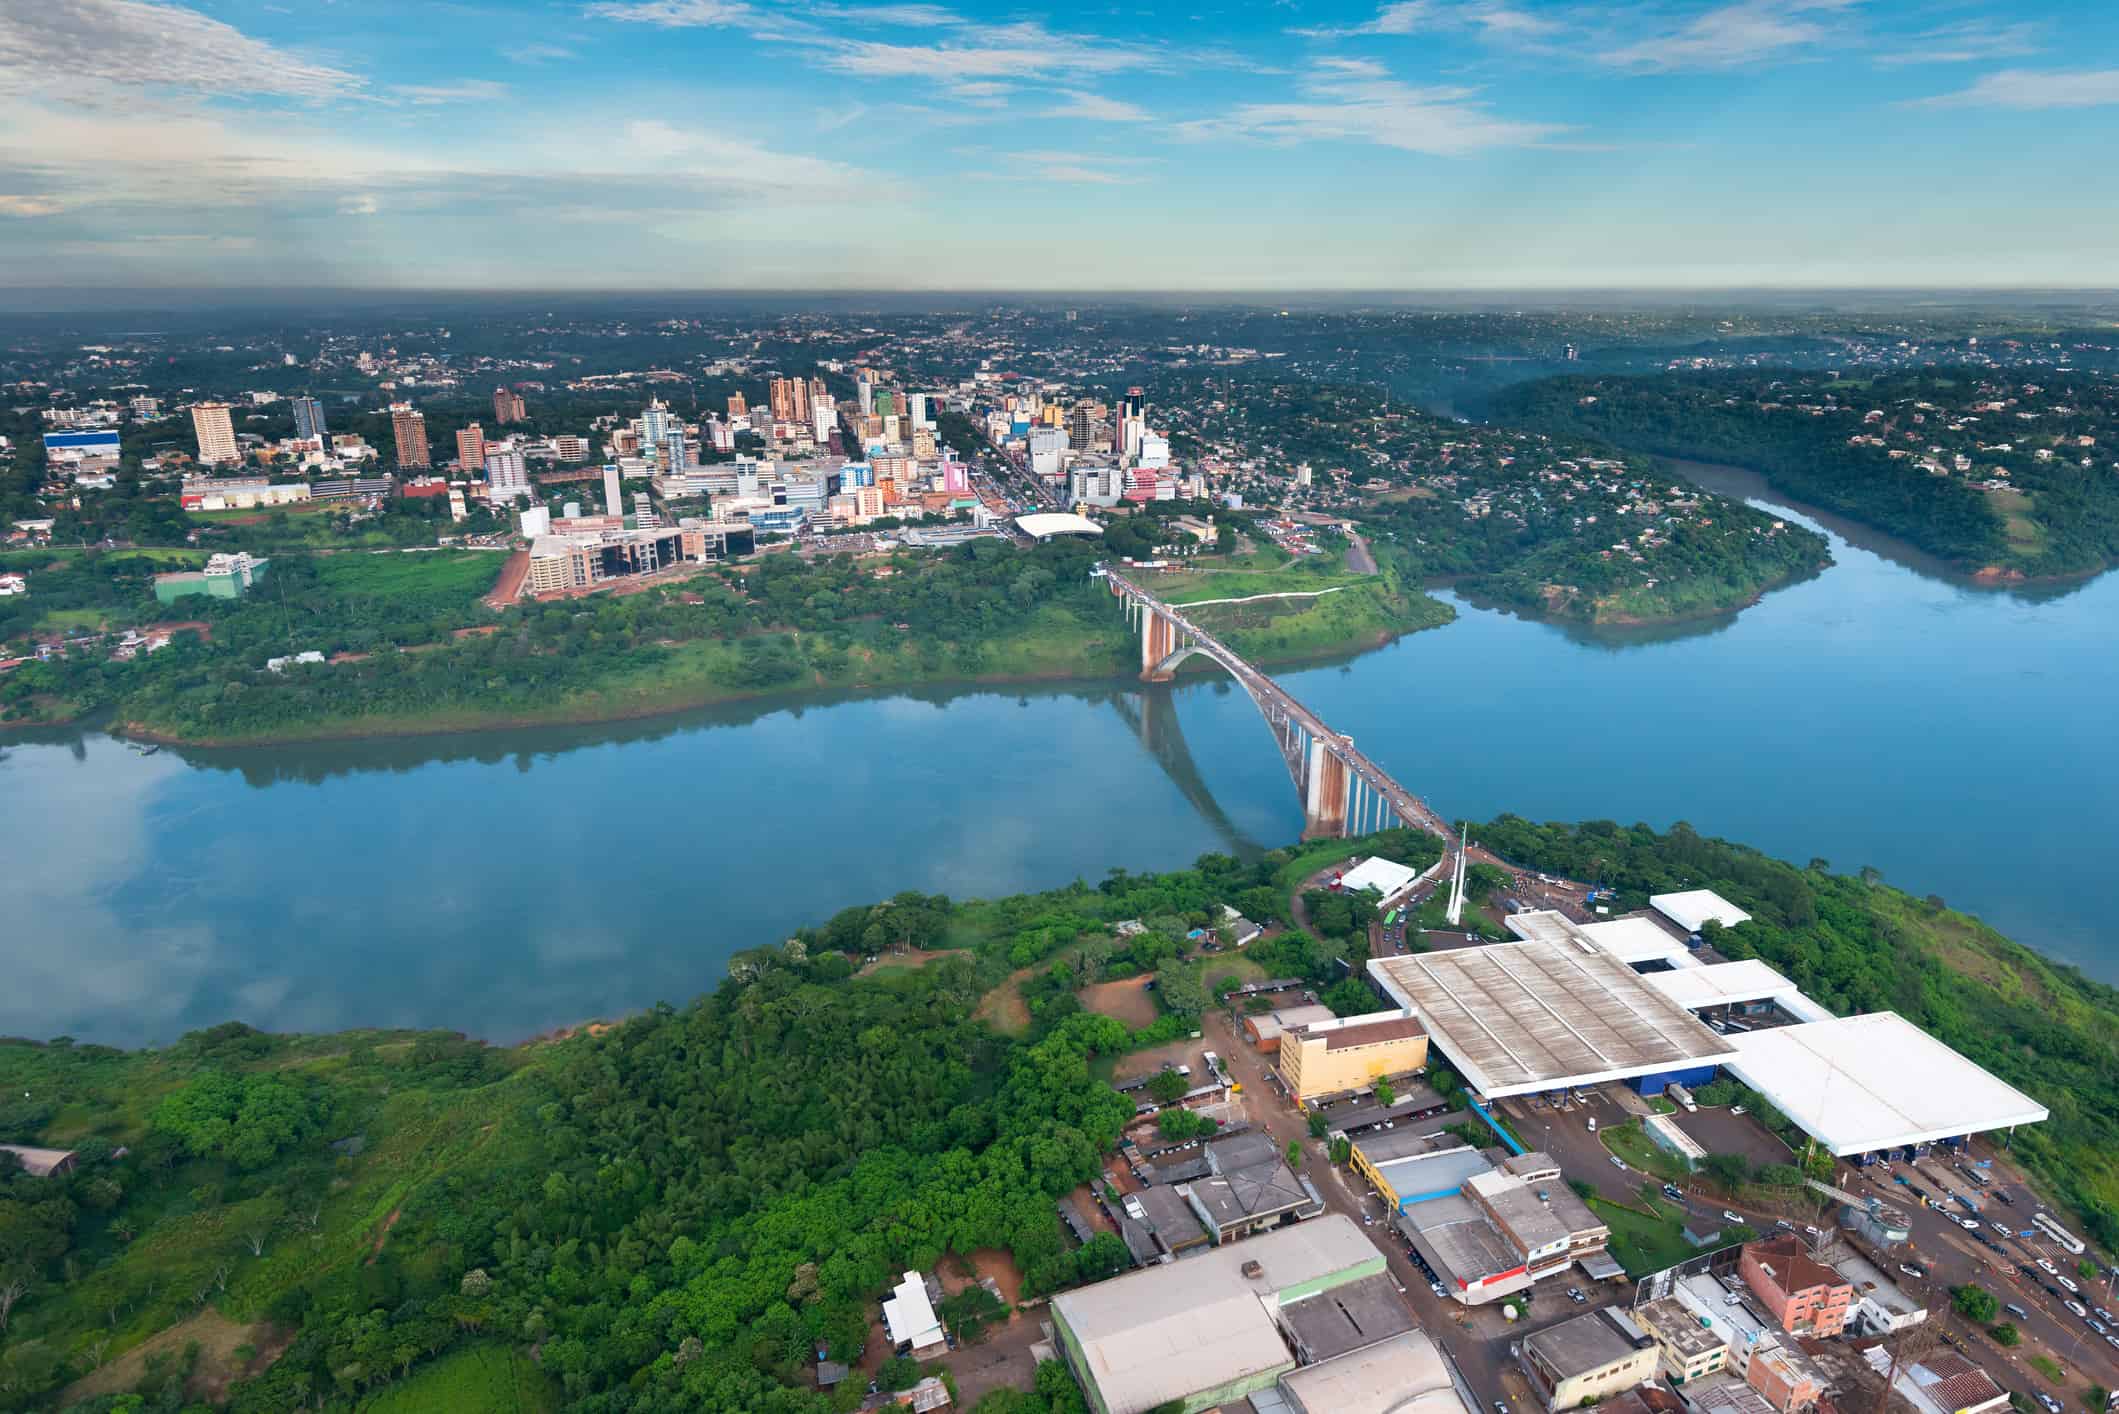 Aerial view of the Paraguayan city of Ciudad del Este and Friendship Bridge